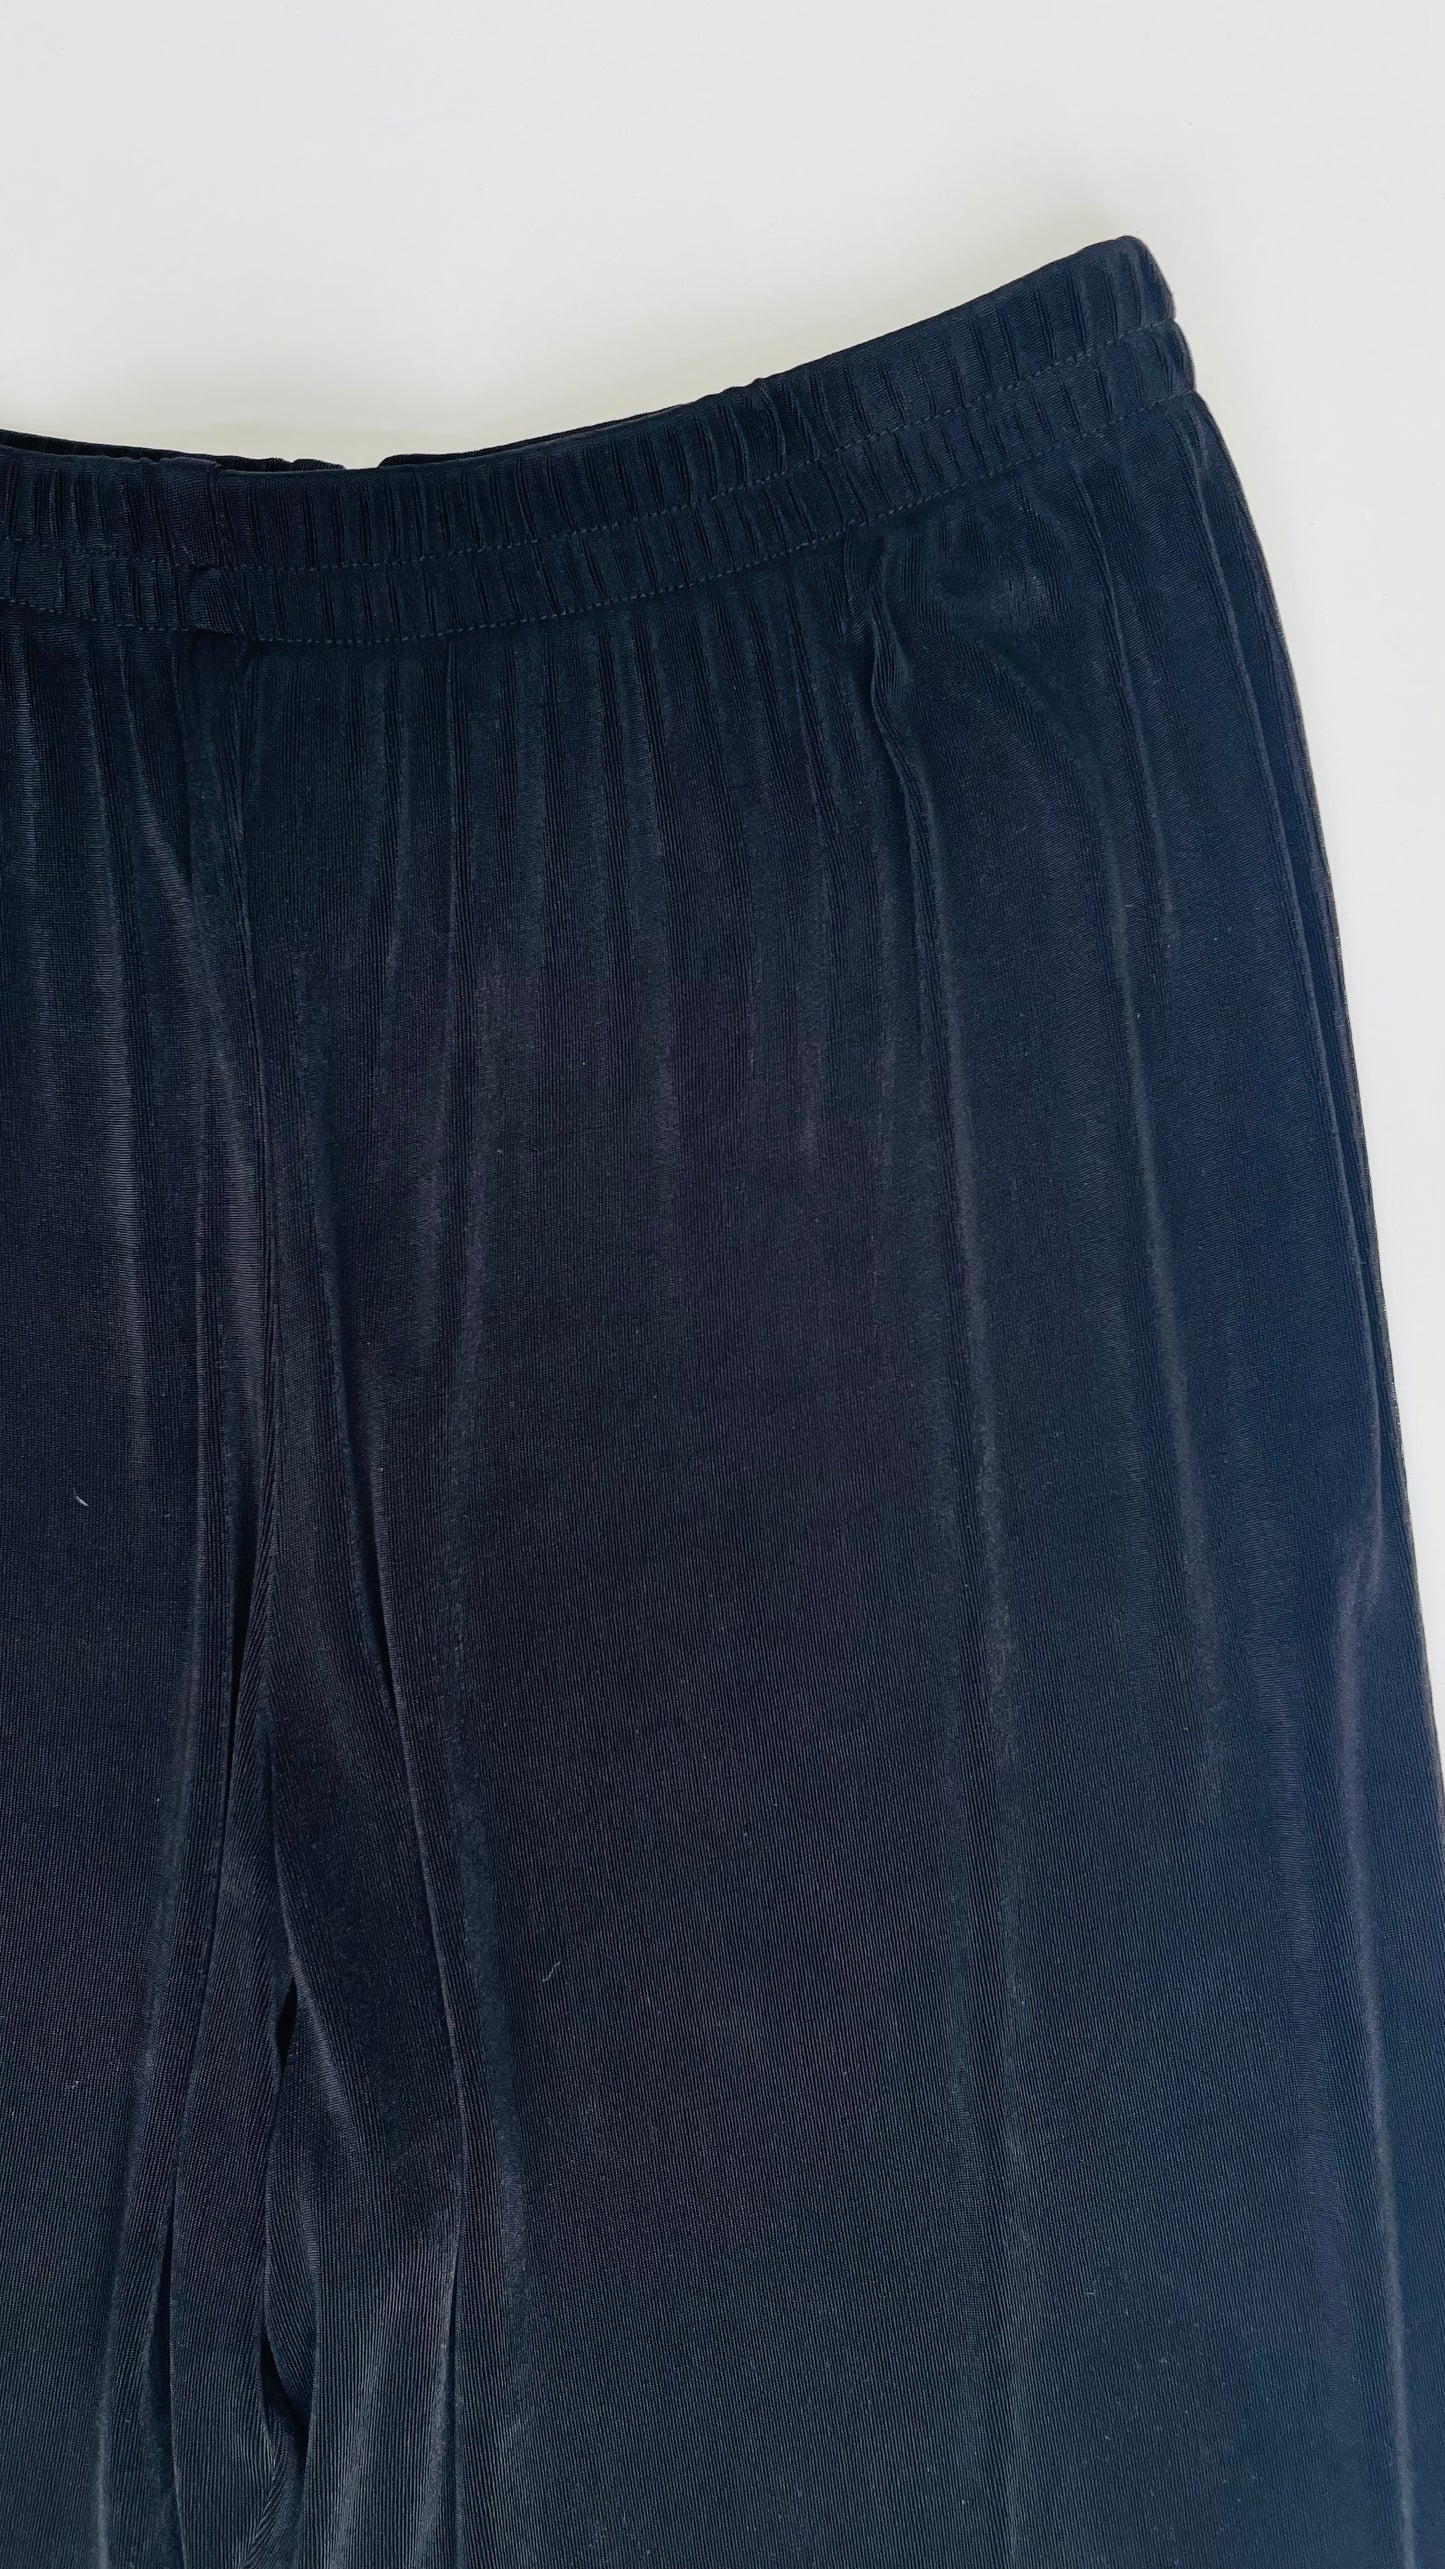 Vintage black 90s knit straight leg dress pants - Size 10